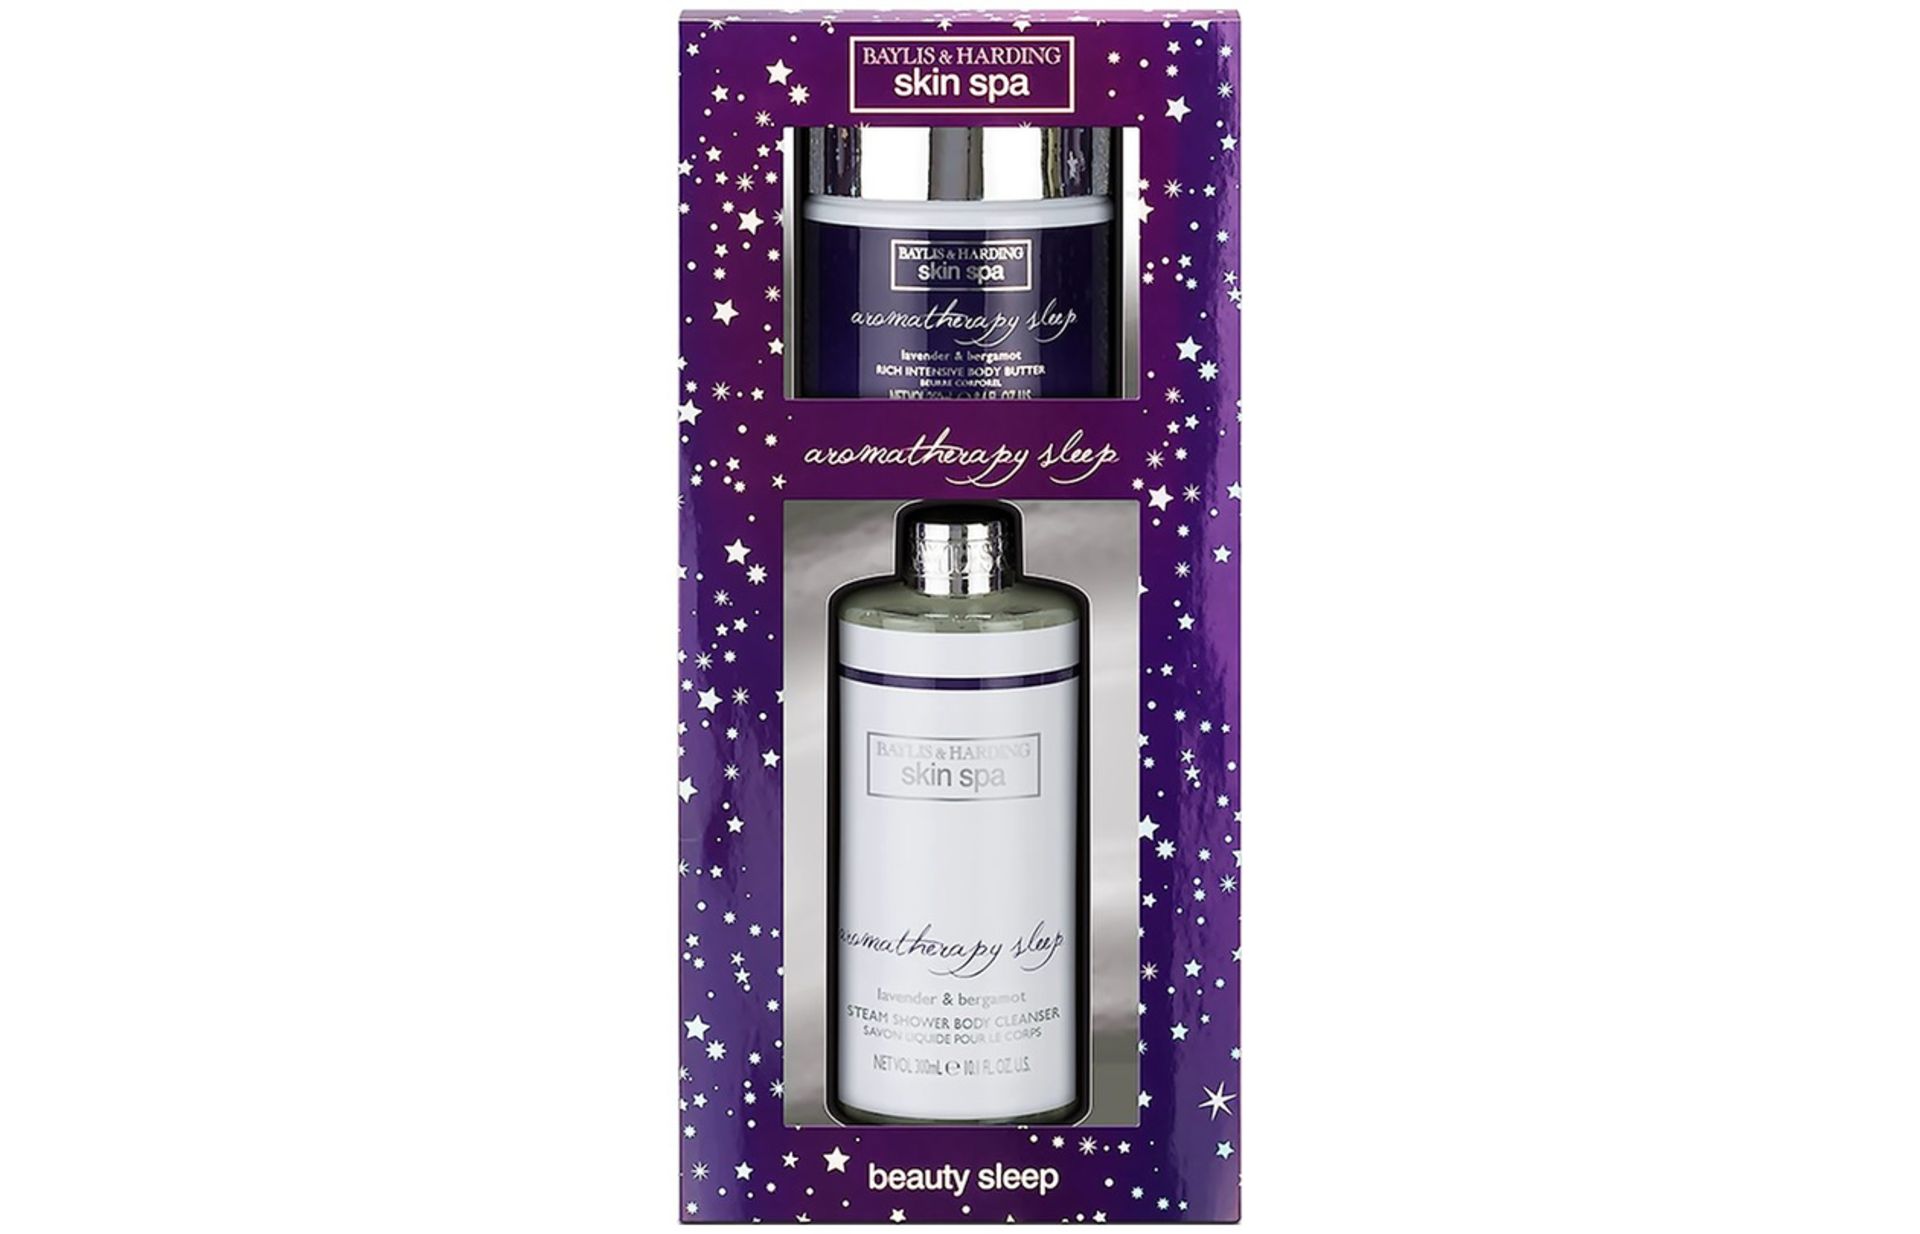 V *TRADE QTY* Brand New Baylis & Harding Skin Spa Aromatherapy Sleep Gift Set ISP £10 X 4 Bid